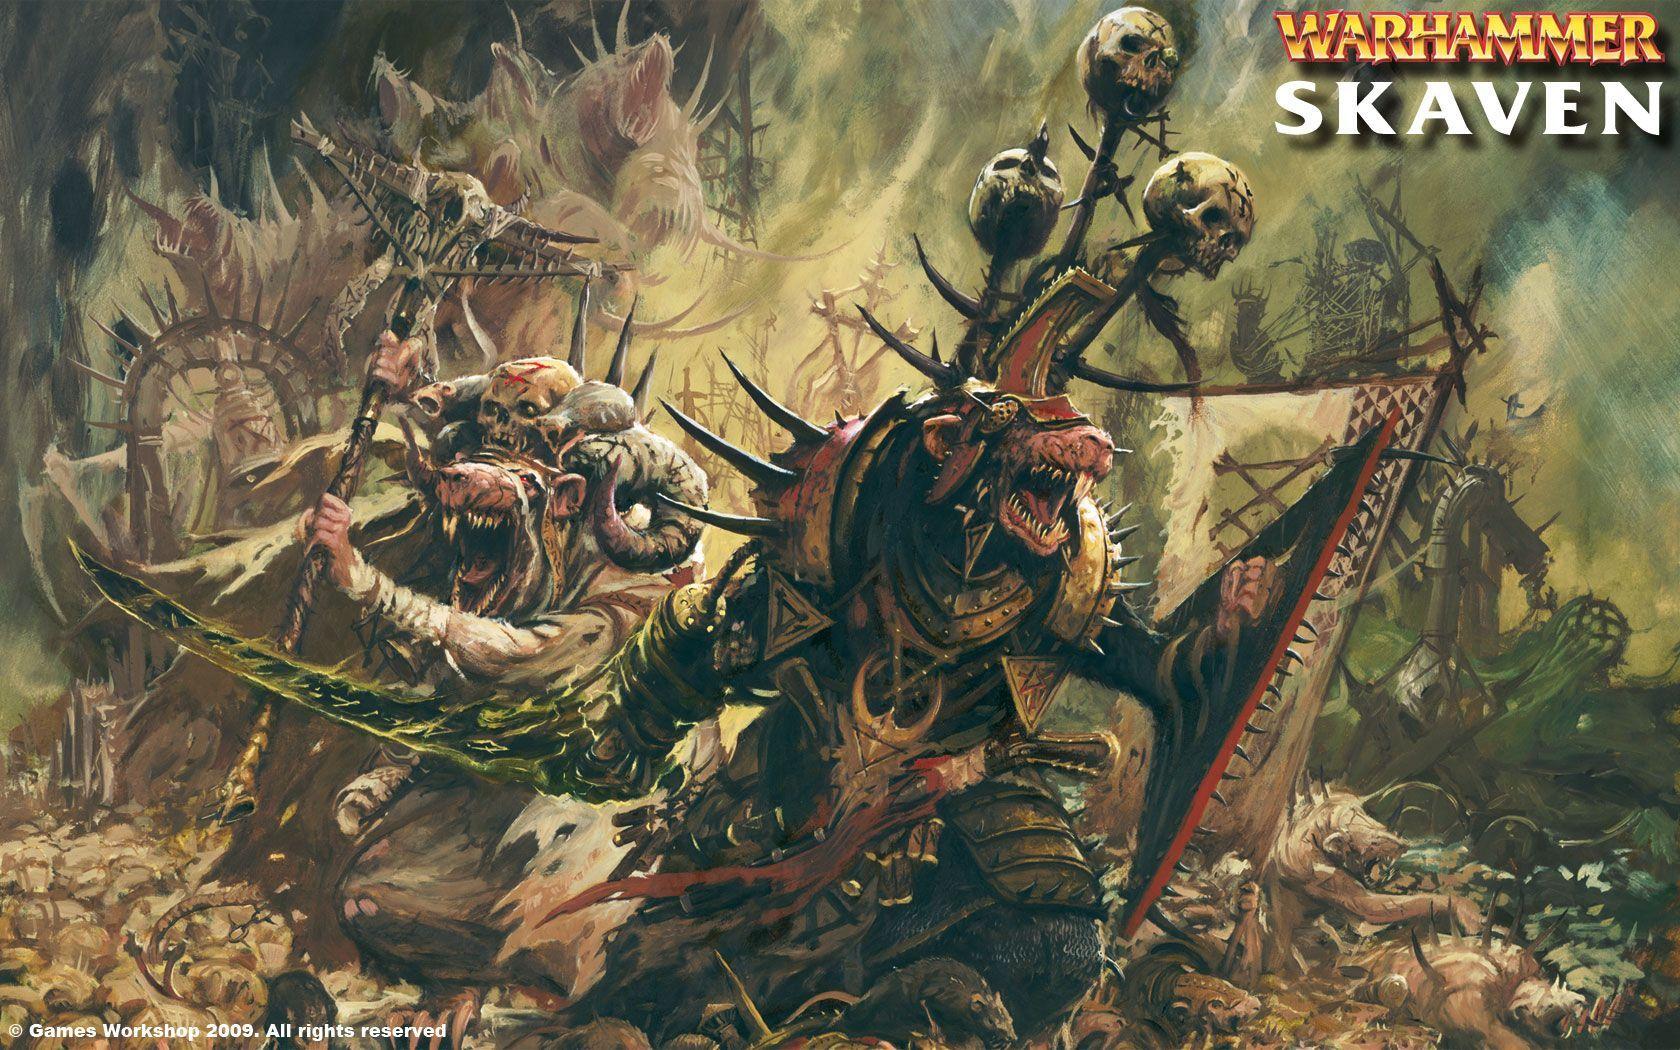 Video Game Warhammer Skaven Wallpaper  Warhammer fantasy Warhammer art  Warhammer fantasy roleplay